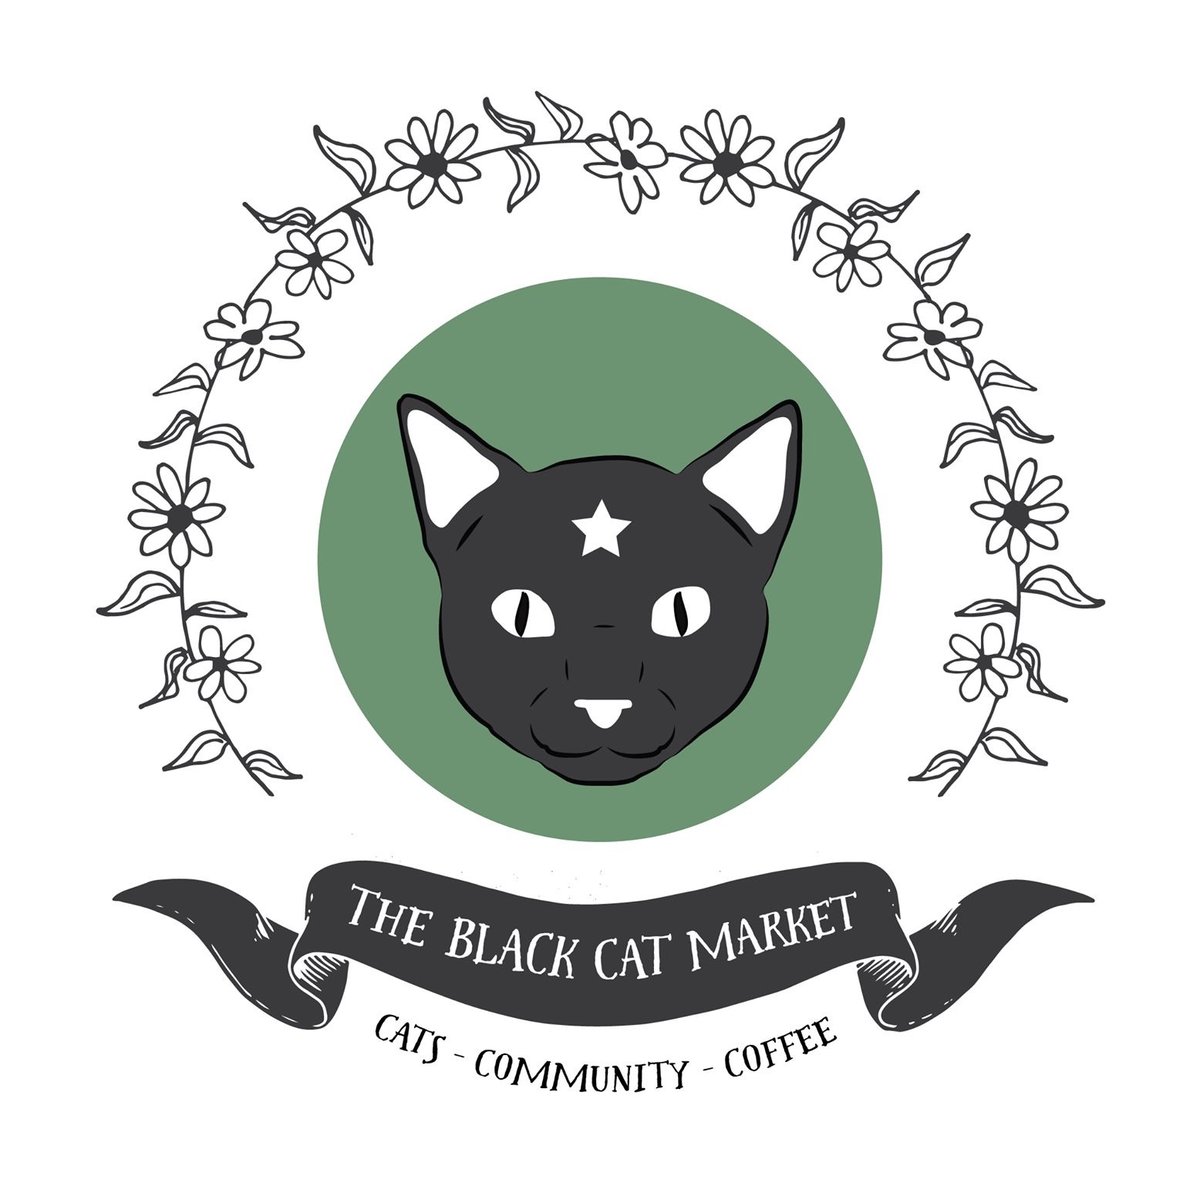 The Black Cat Market